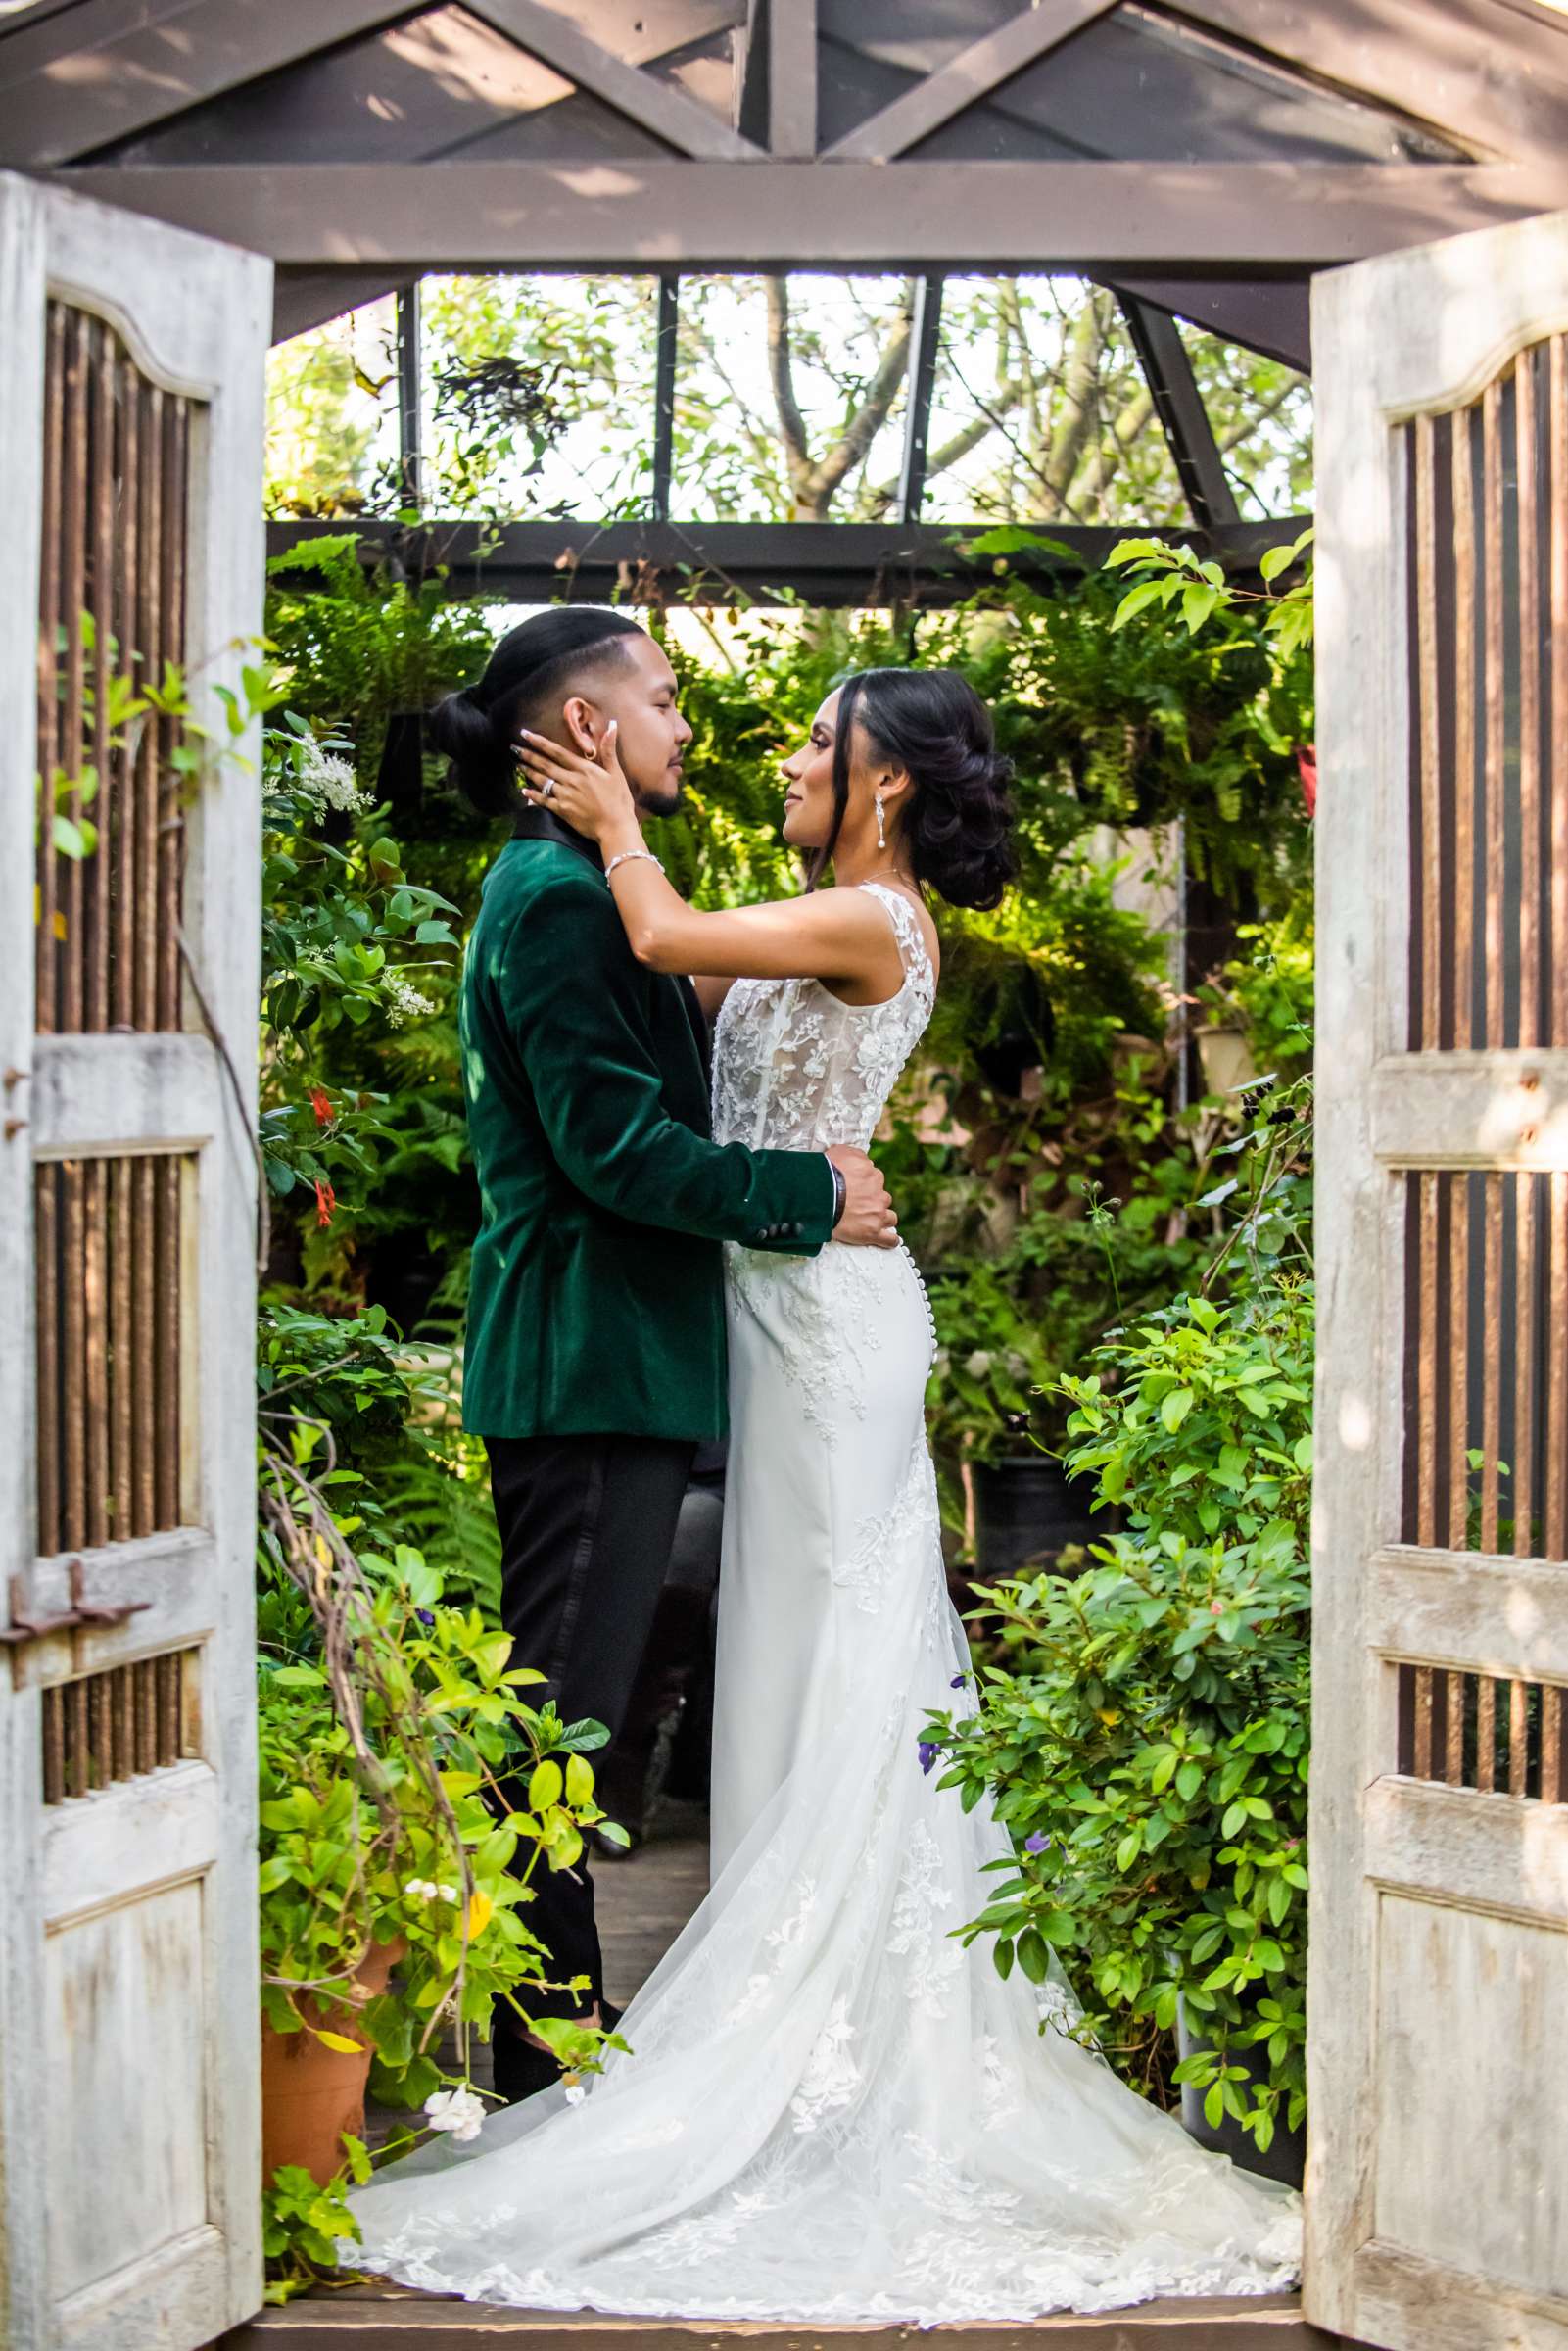 Twin Oaks House & Gardens Wedding Estate Wedding, Lottiesha and Christian Wedding Photo #16 by True Photography